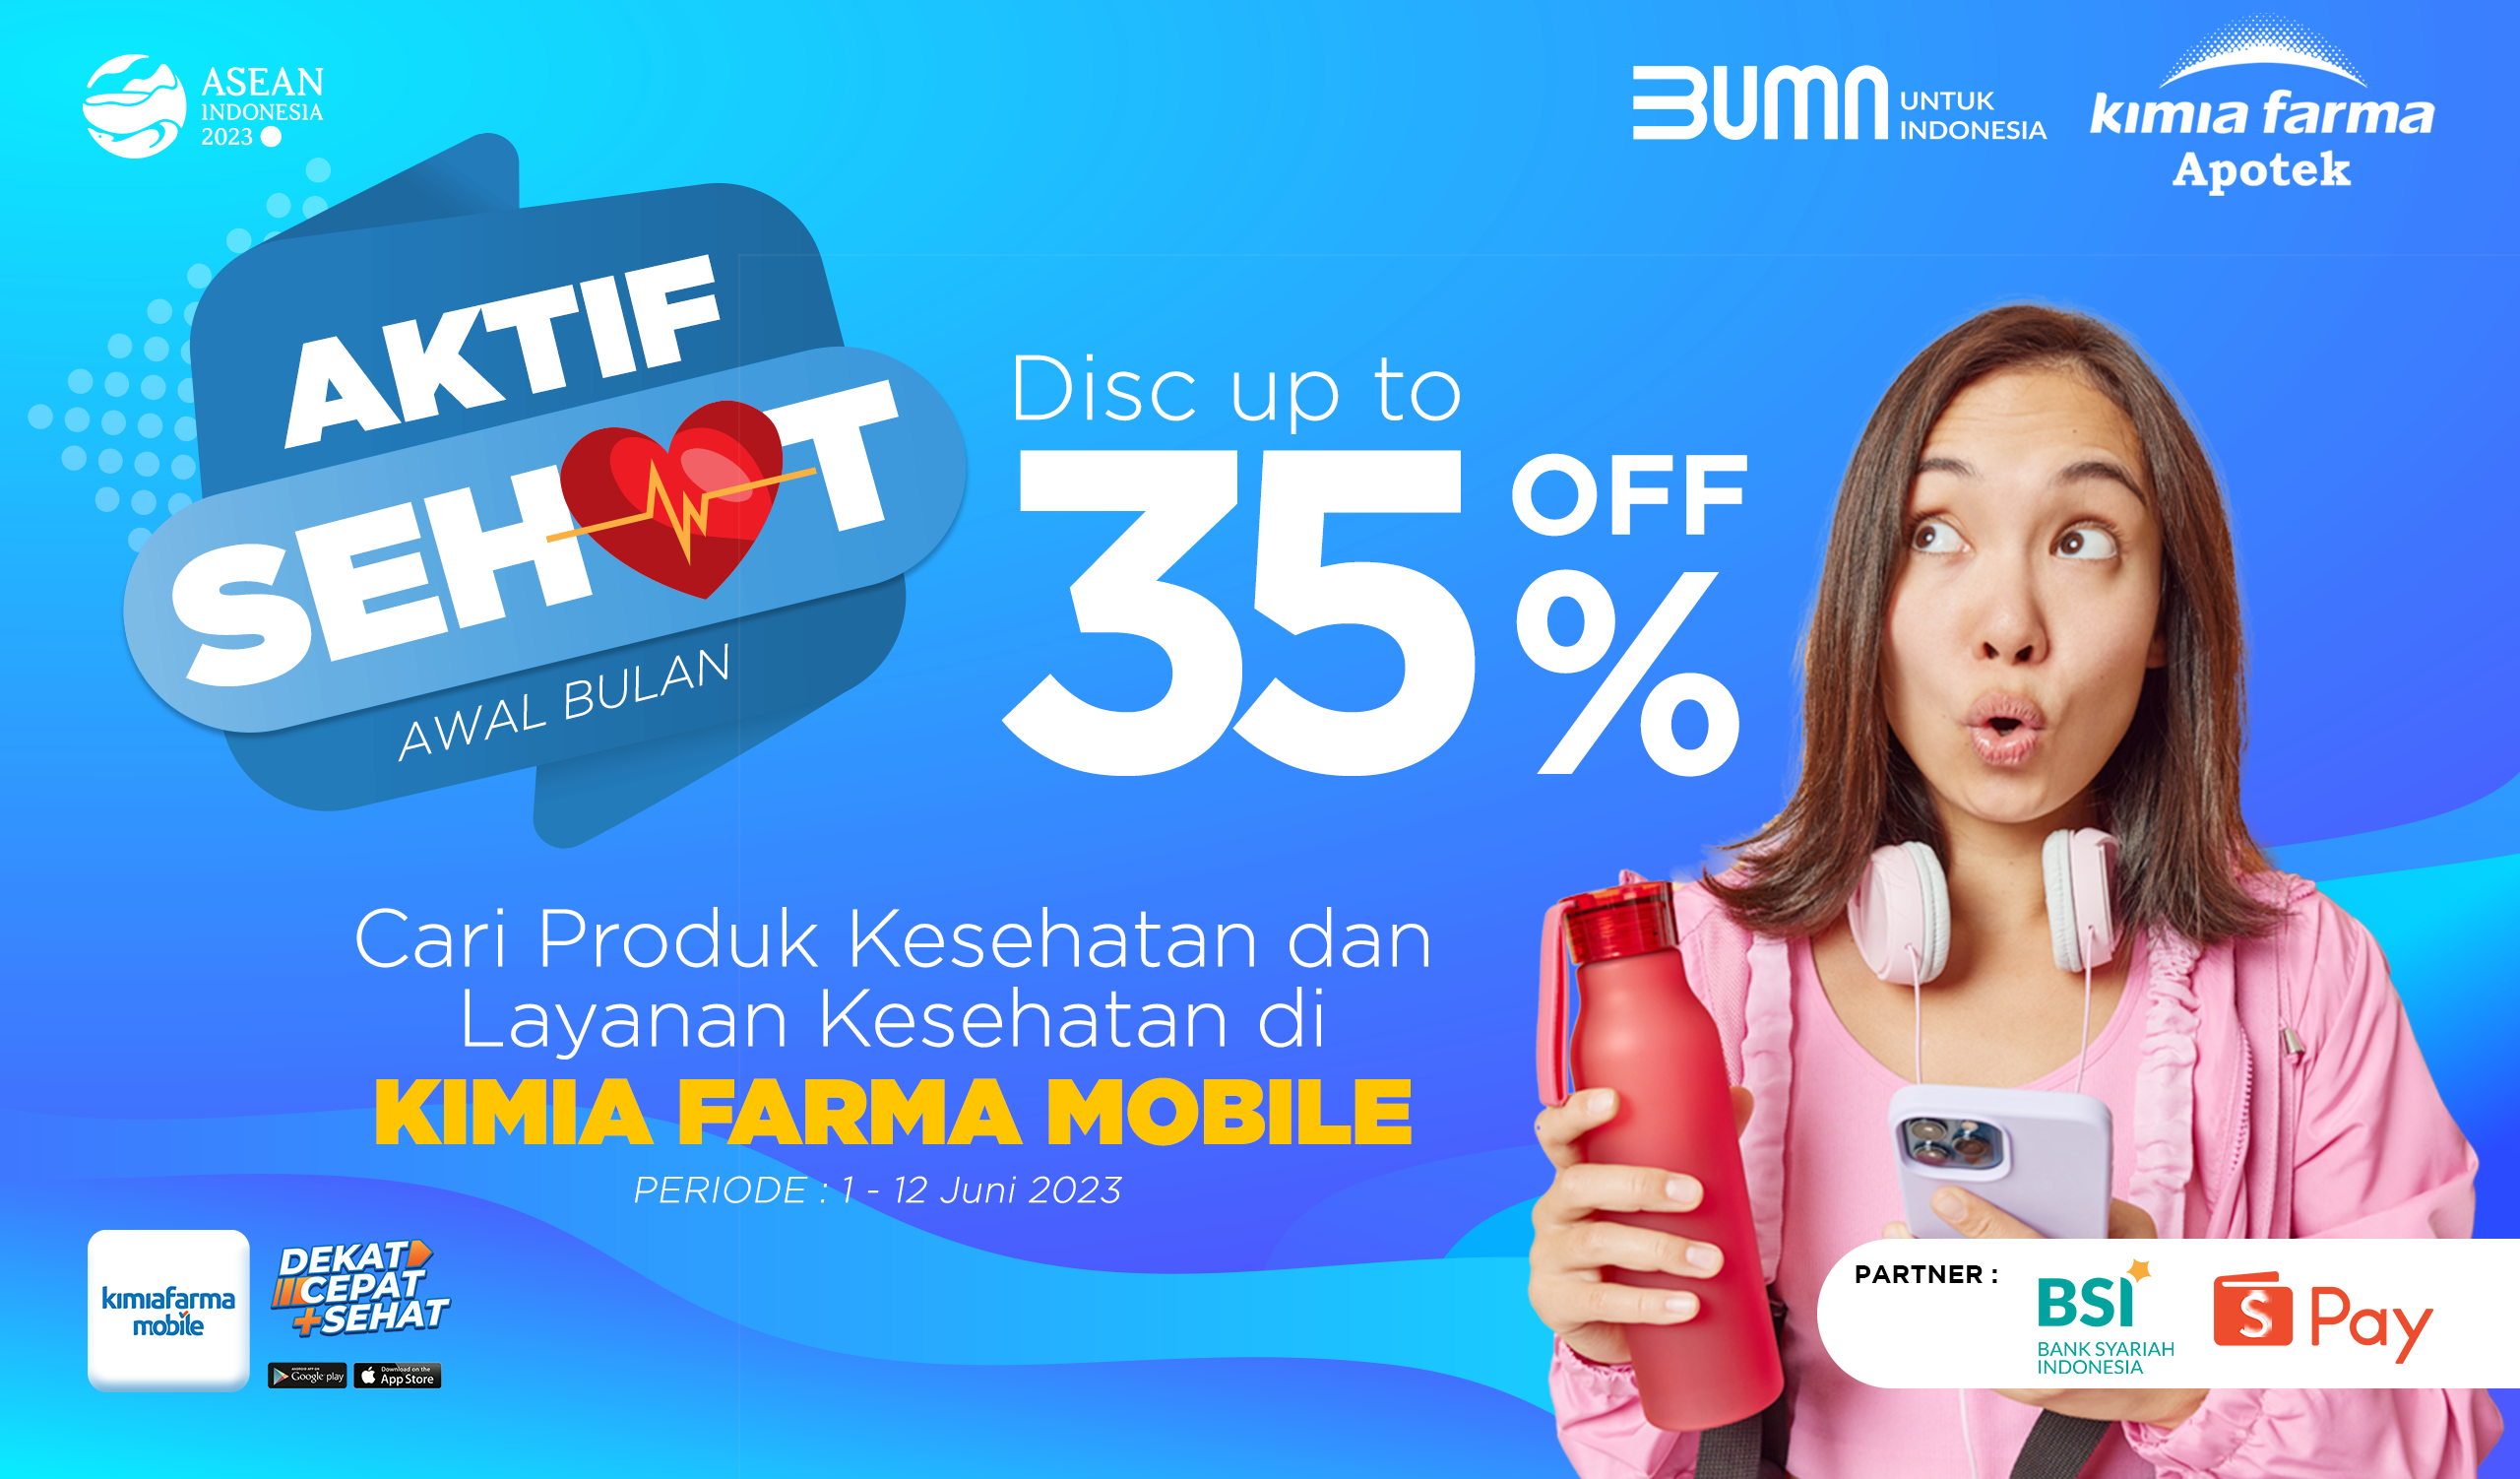 You are currently viewing Sehat di Awal Bulan dengan Promo Kimia Farma Mobile!